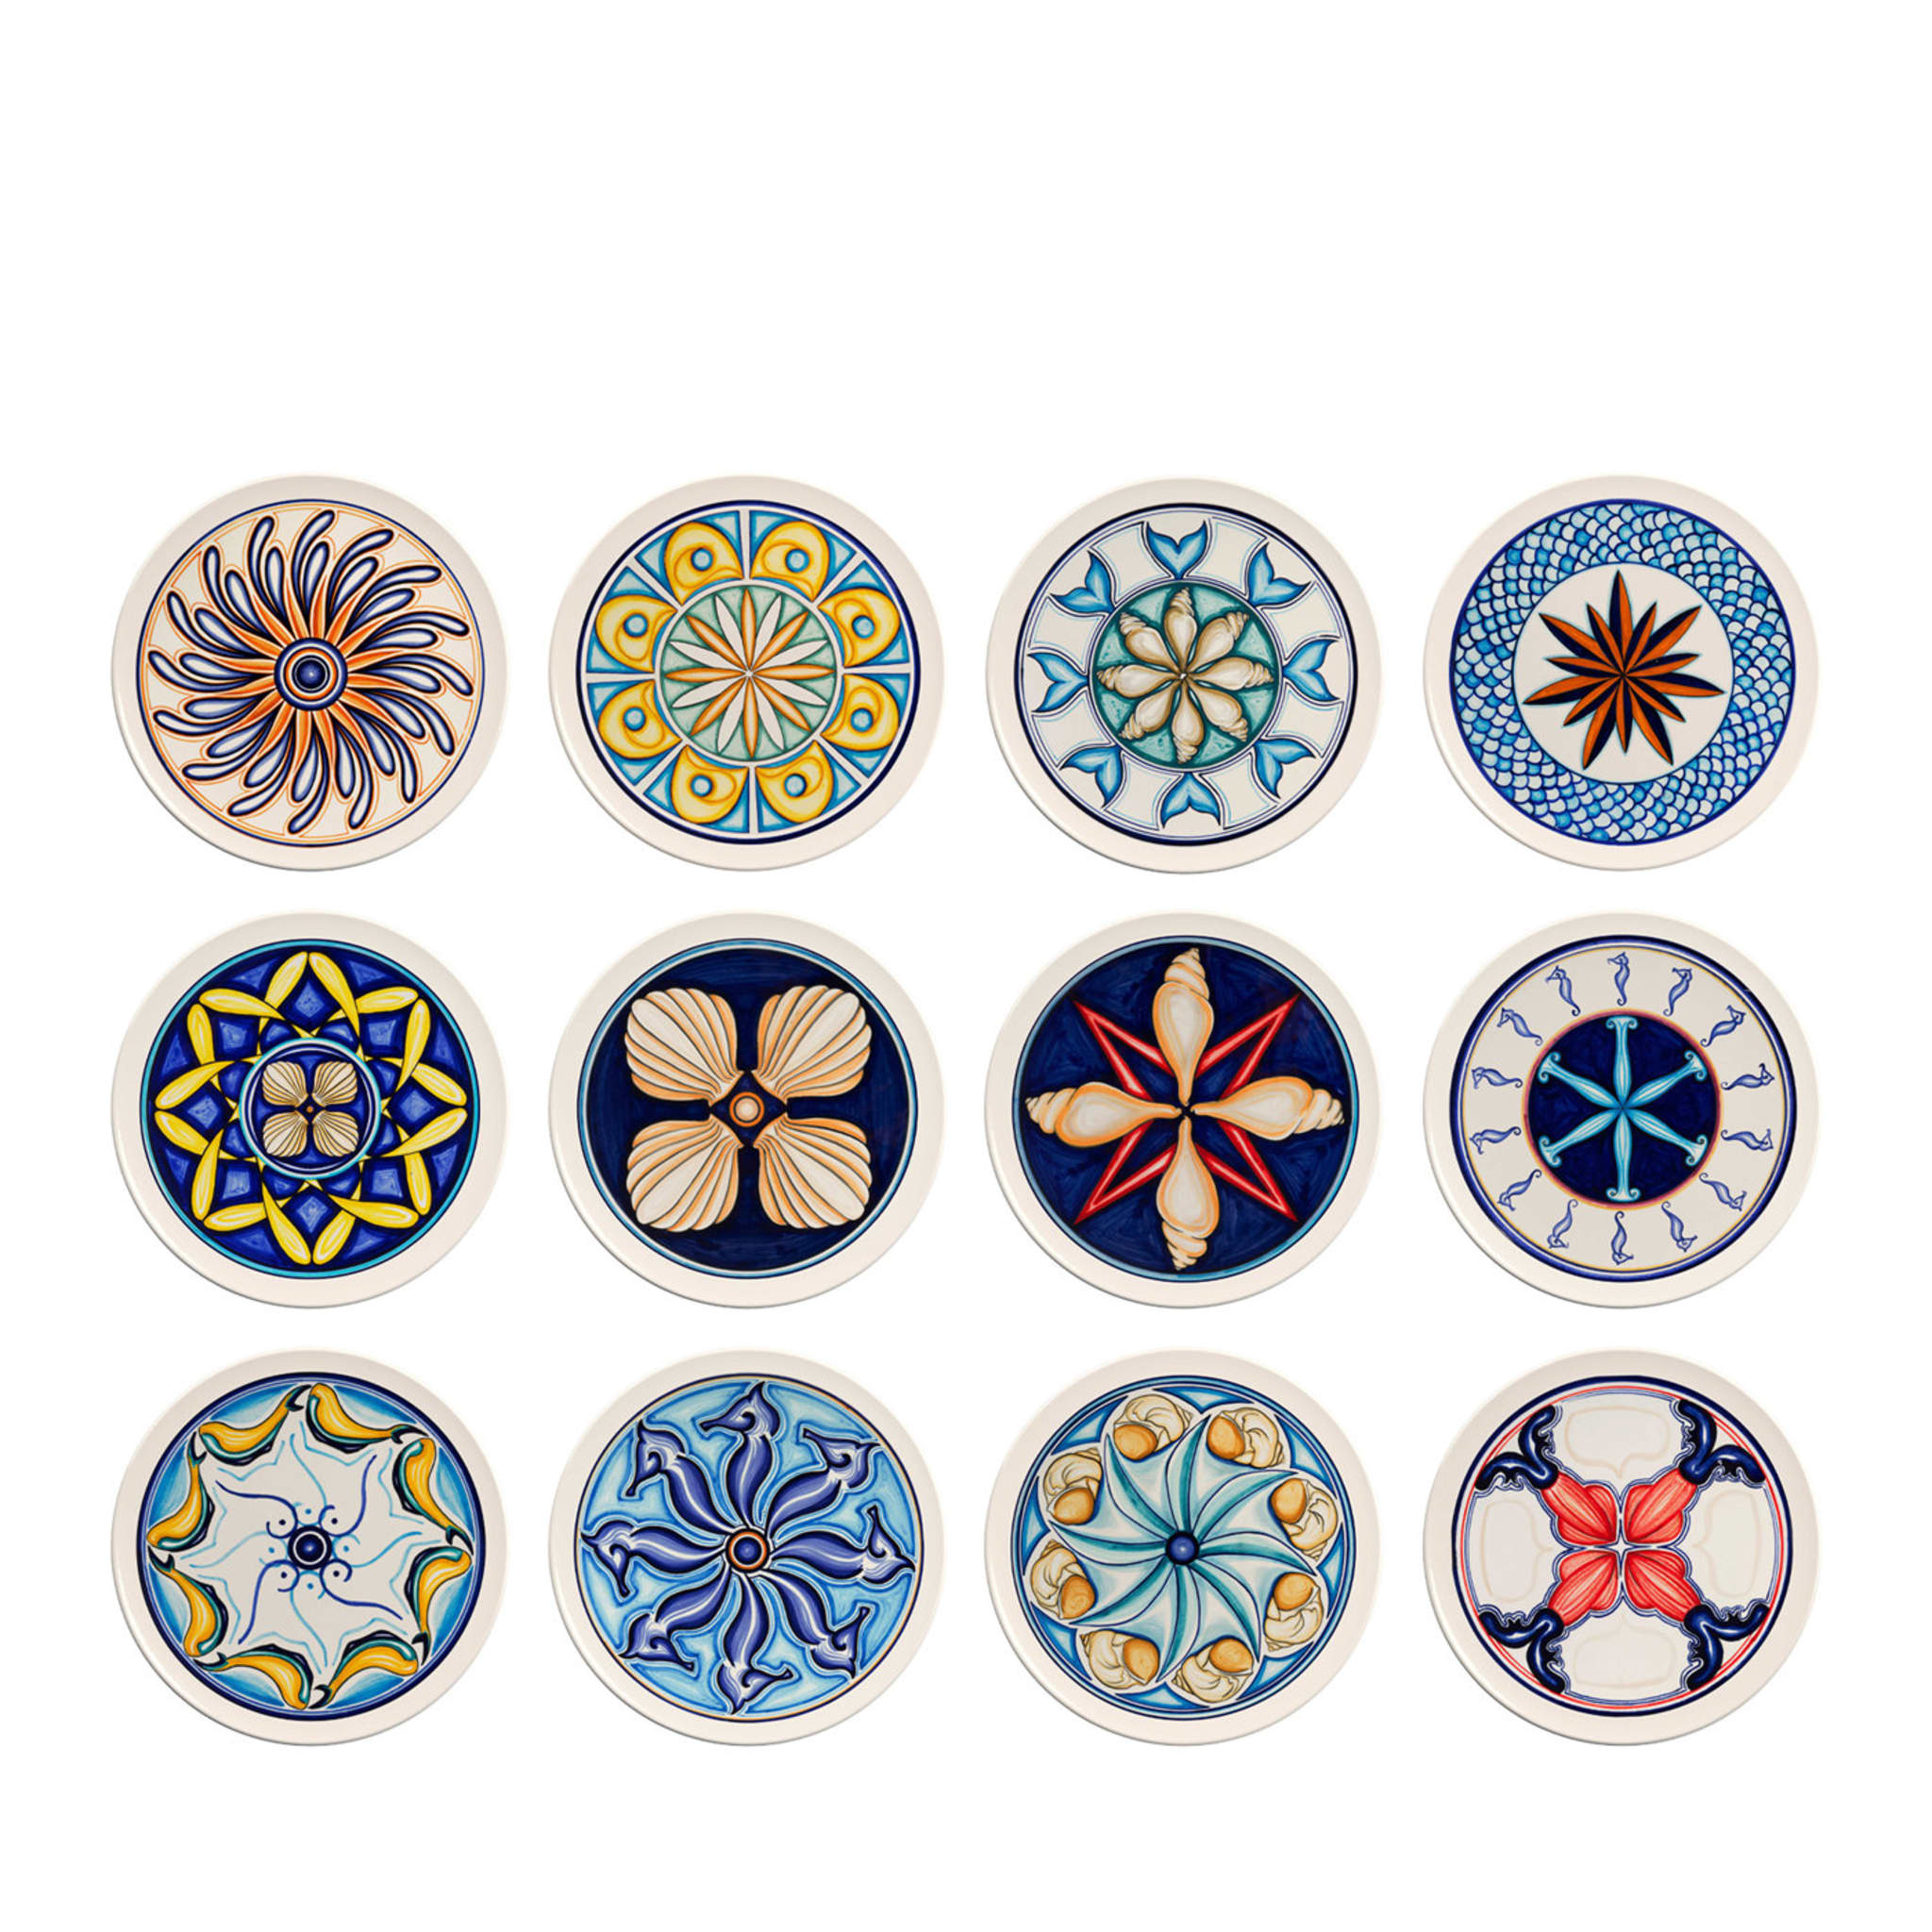 Colapesce Set of 12 Decorative Plates #1 - Main view